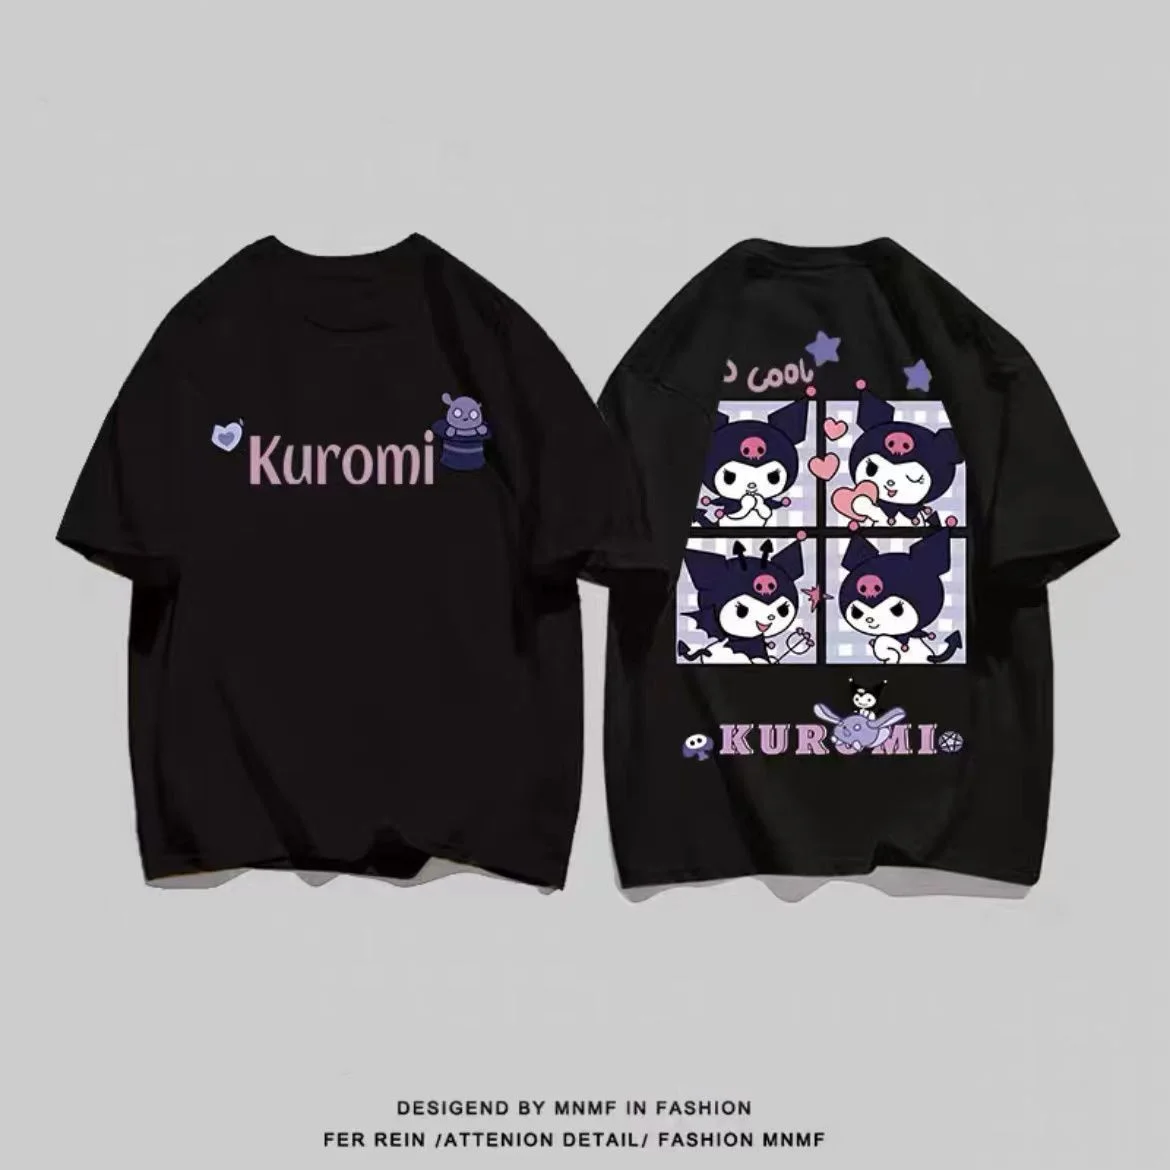 Sanrios Kawaii Anime Kuromi Cute Cartoon Short Sleeve T Shirt New Summer Loose Thin Cotton Top 3 - Kuromi Plush